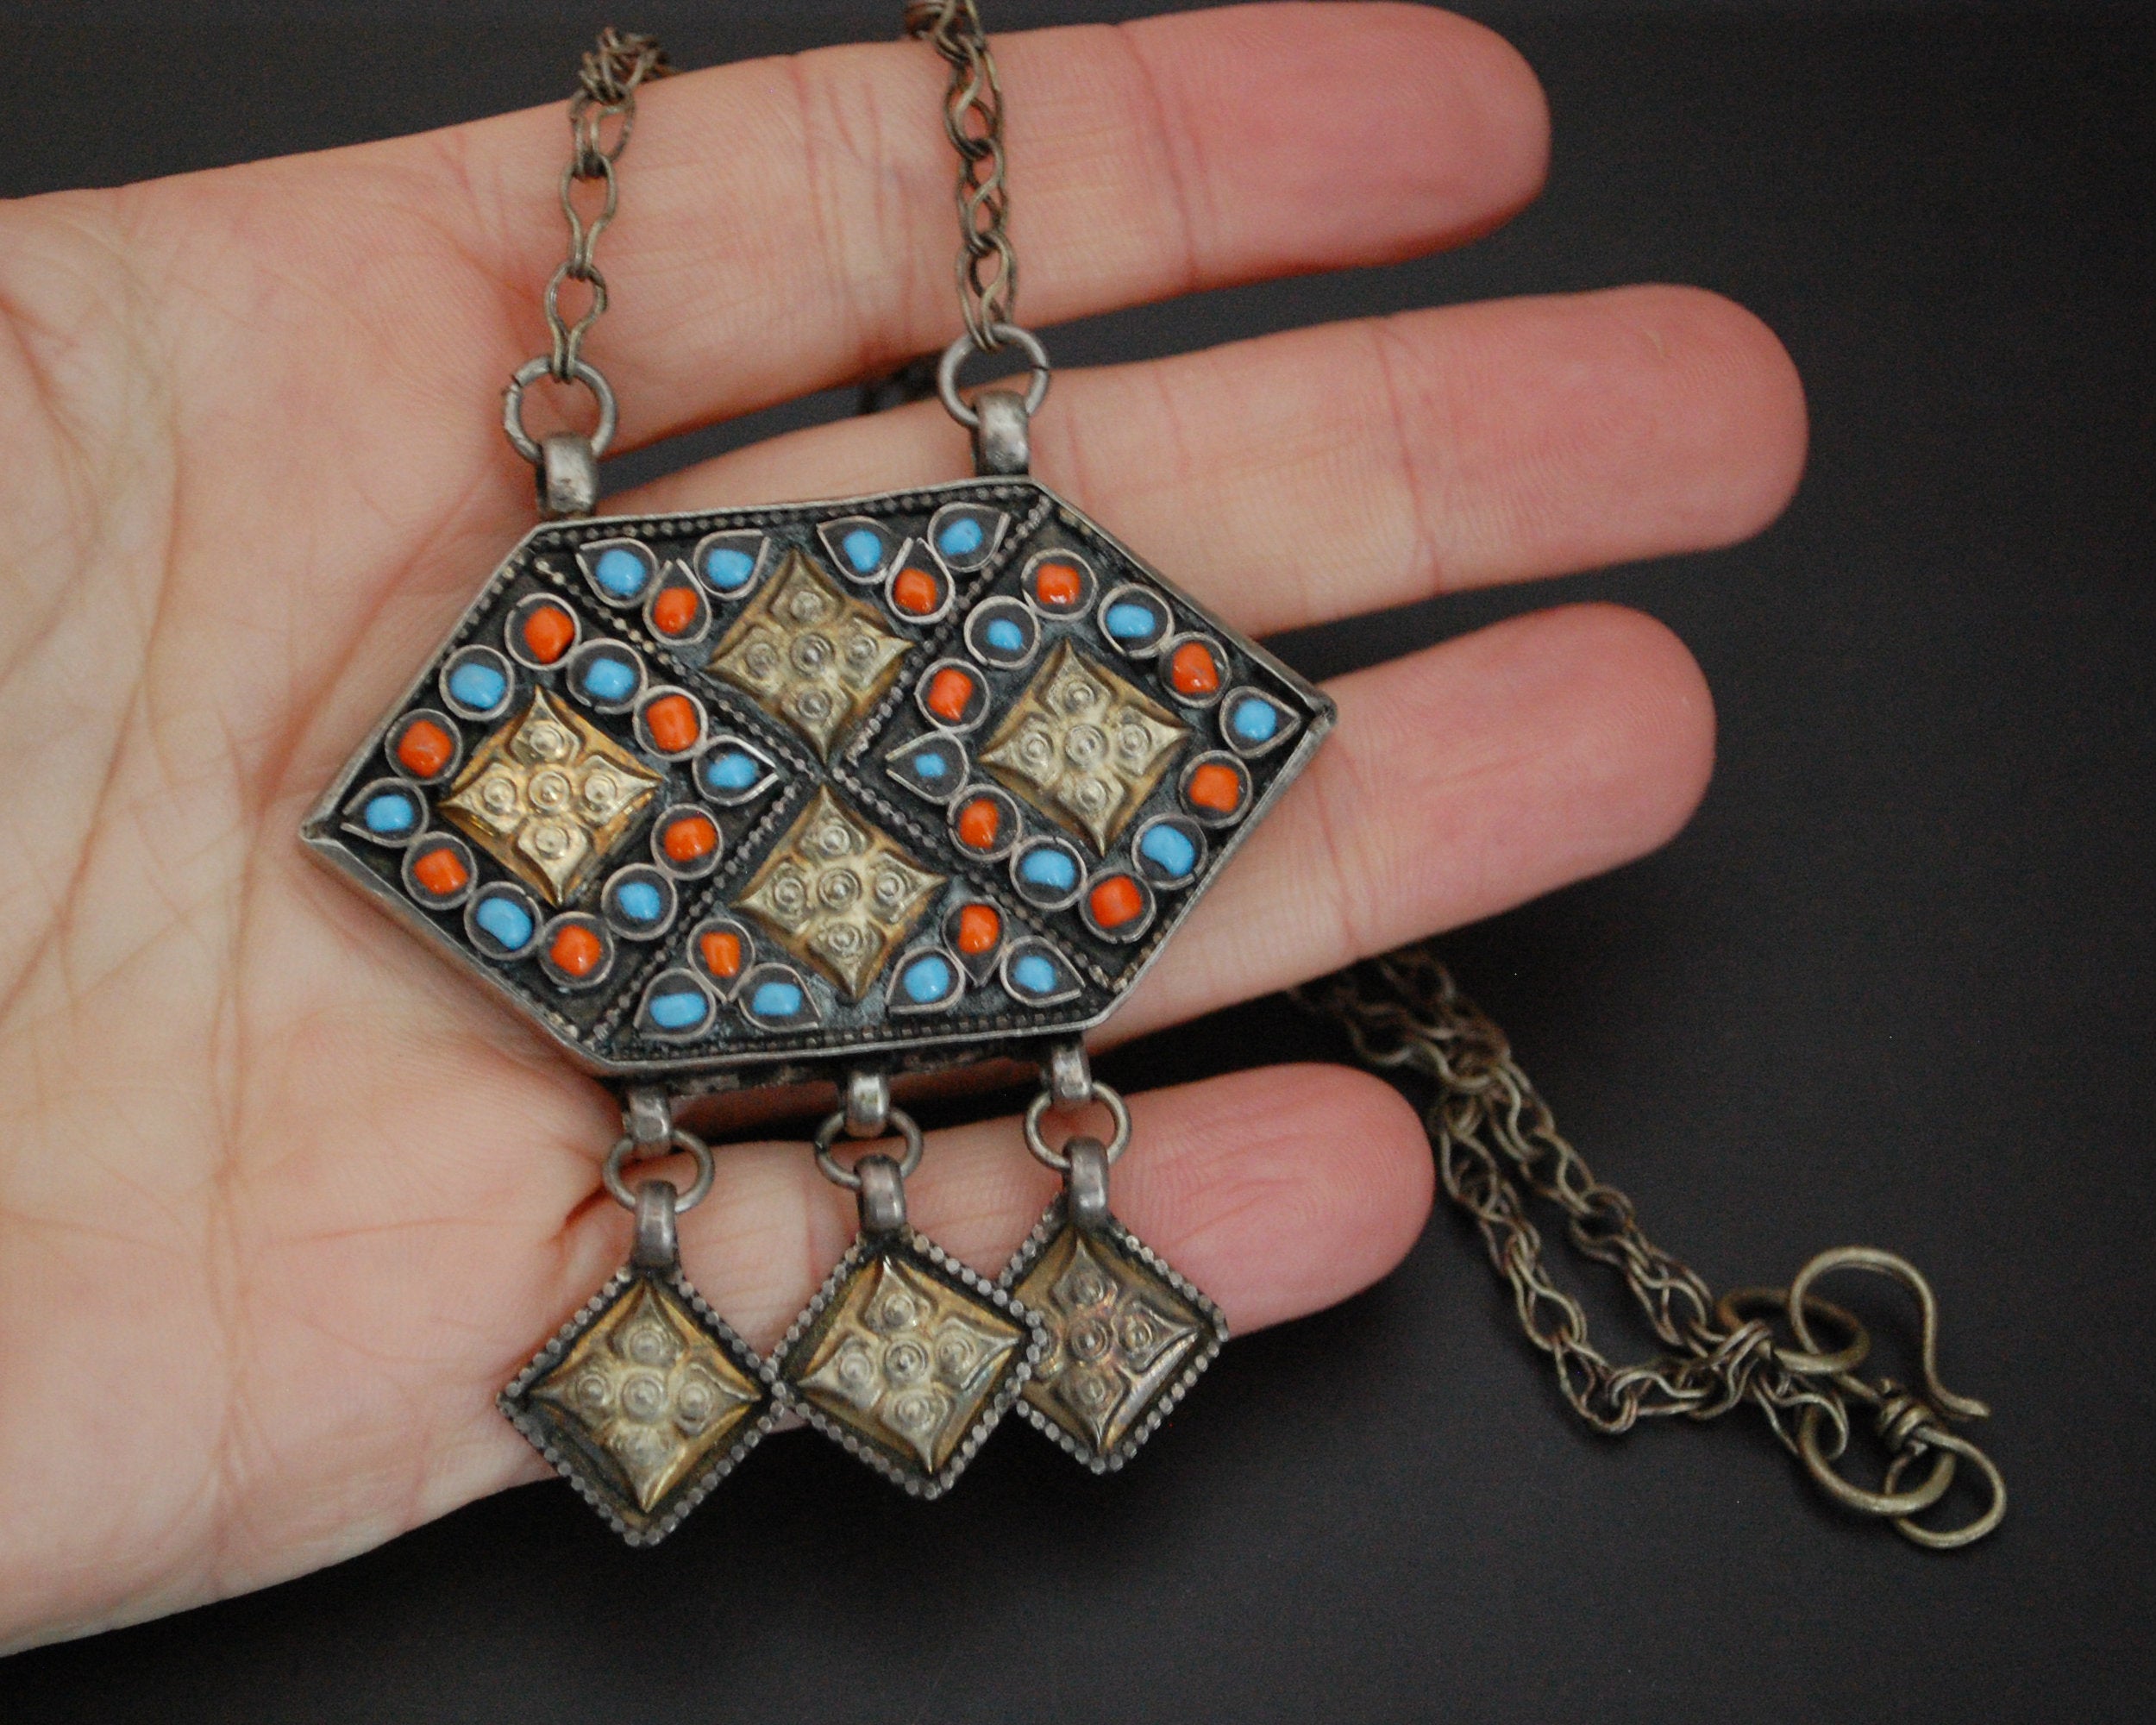 Uzbek Gilded Box Necklace with Dangles